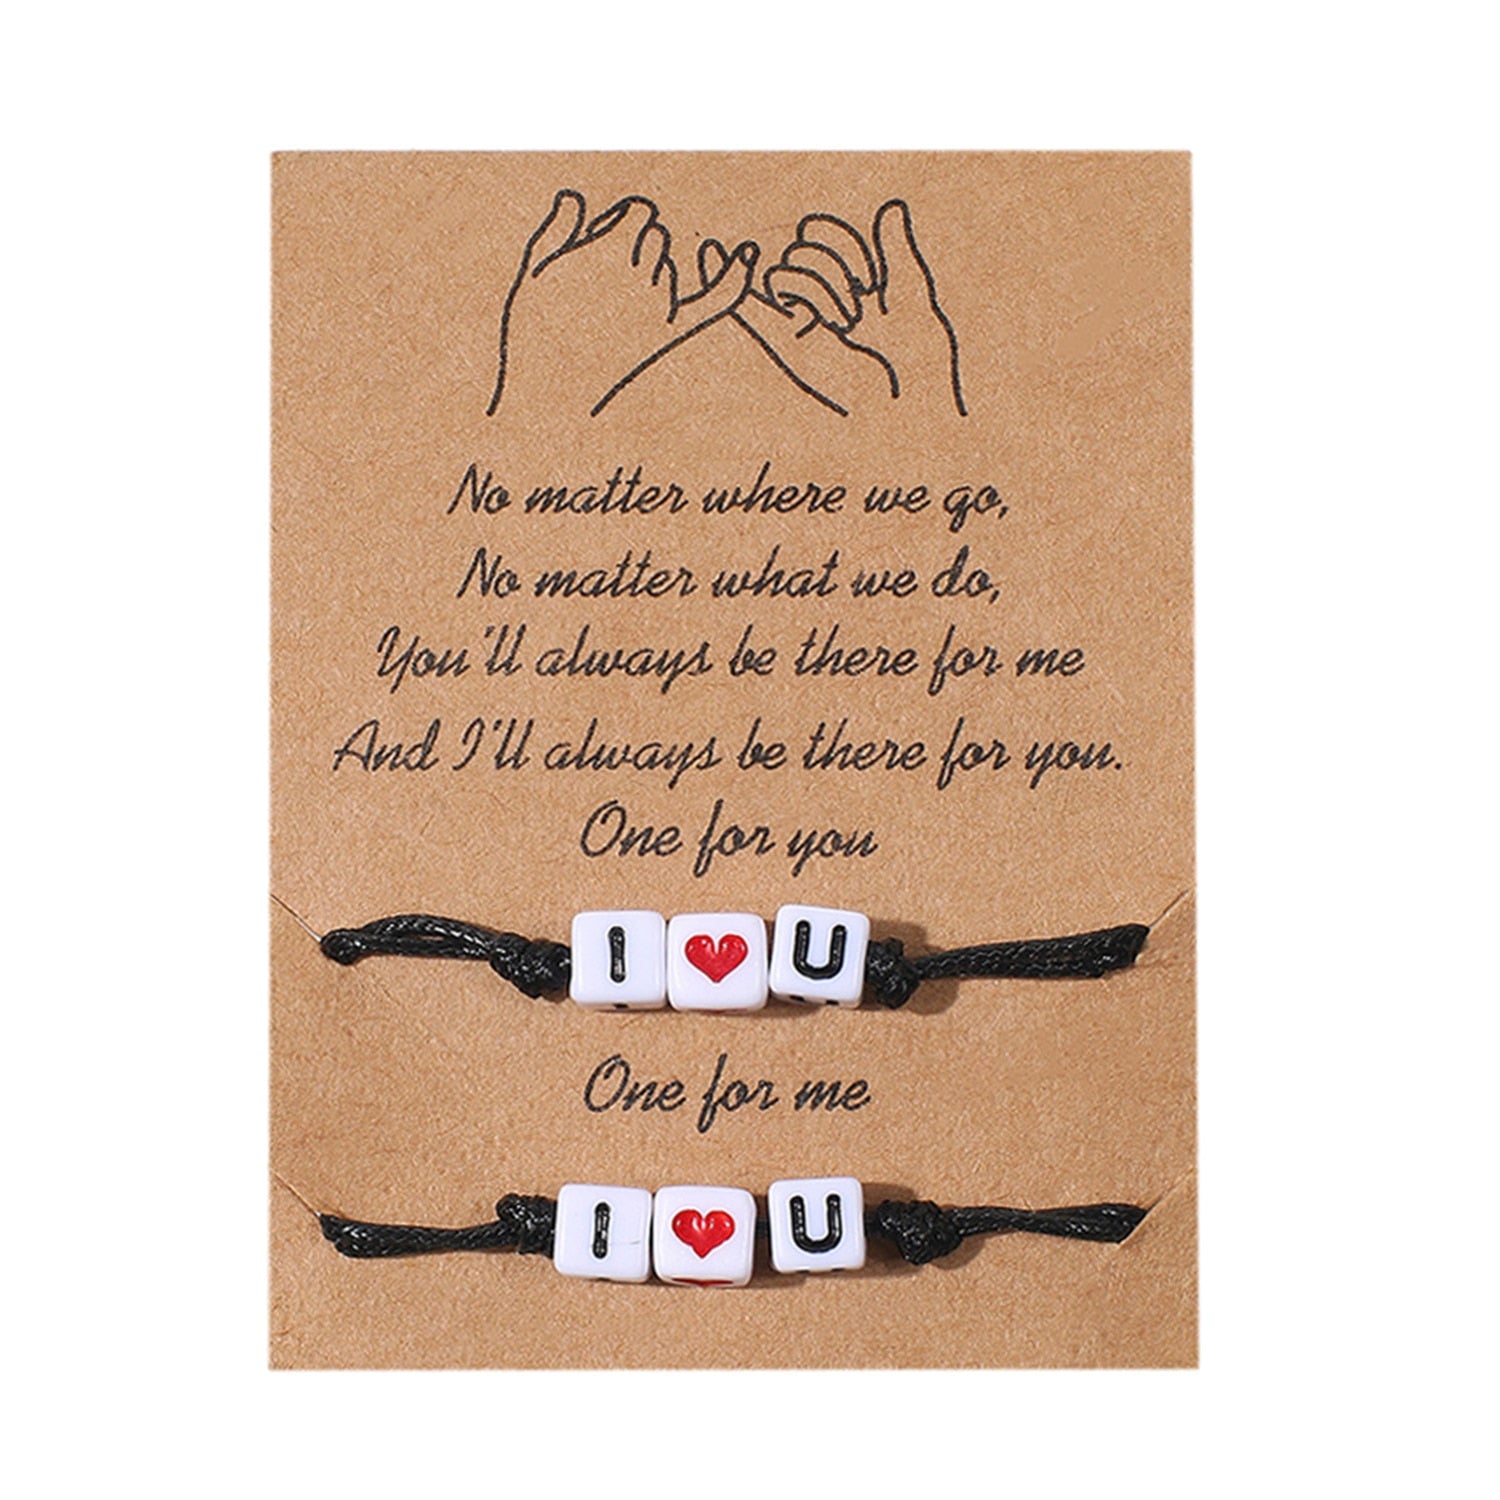 2 PCS/Set Couple Bracelet For Women Lover Sun Moon Star Heart Handmade Braided Rope Charm Friendship Girlfriend Jewelry Gift